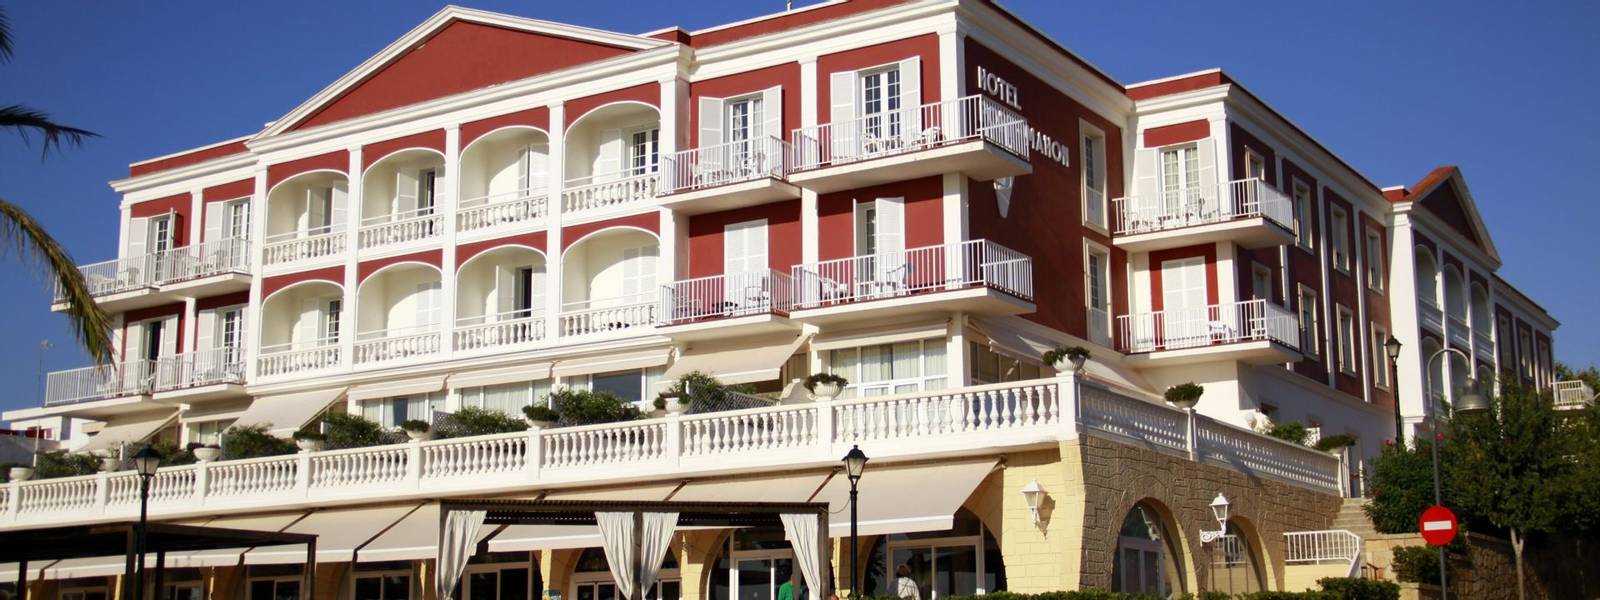 Spain - Menorca - Hotel Port Mahon - exterior.JPG